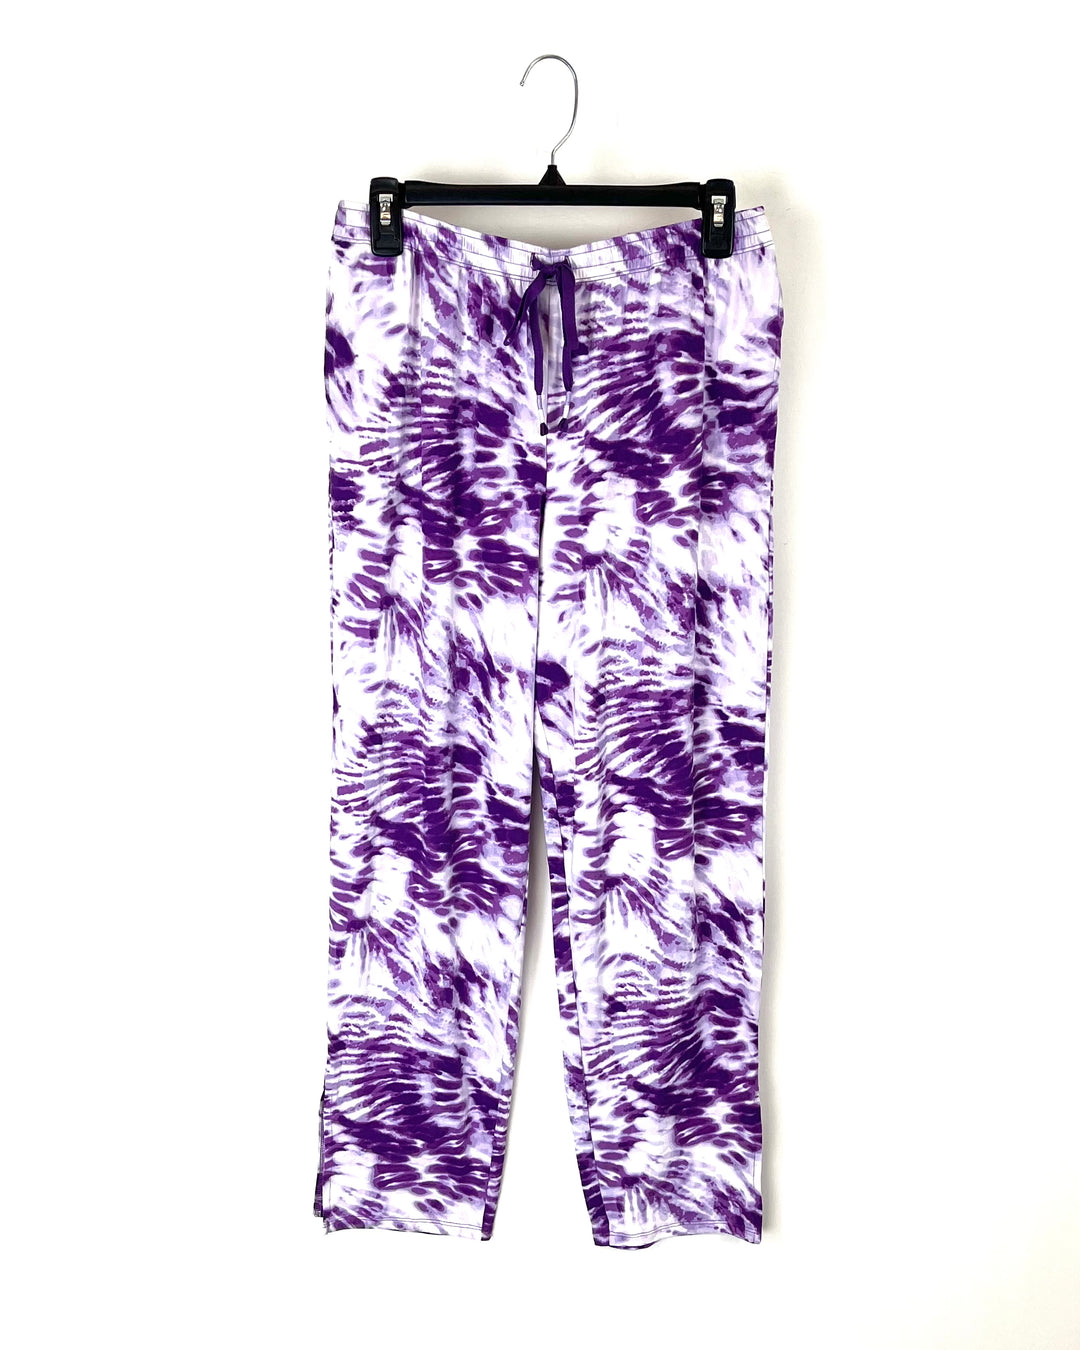 Purple Tie Dye Pants - Small/Medium